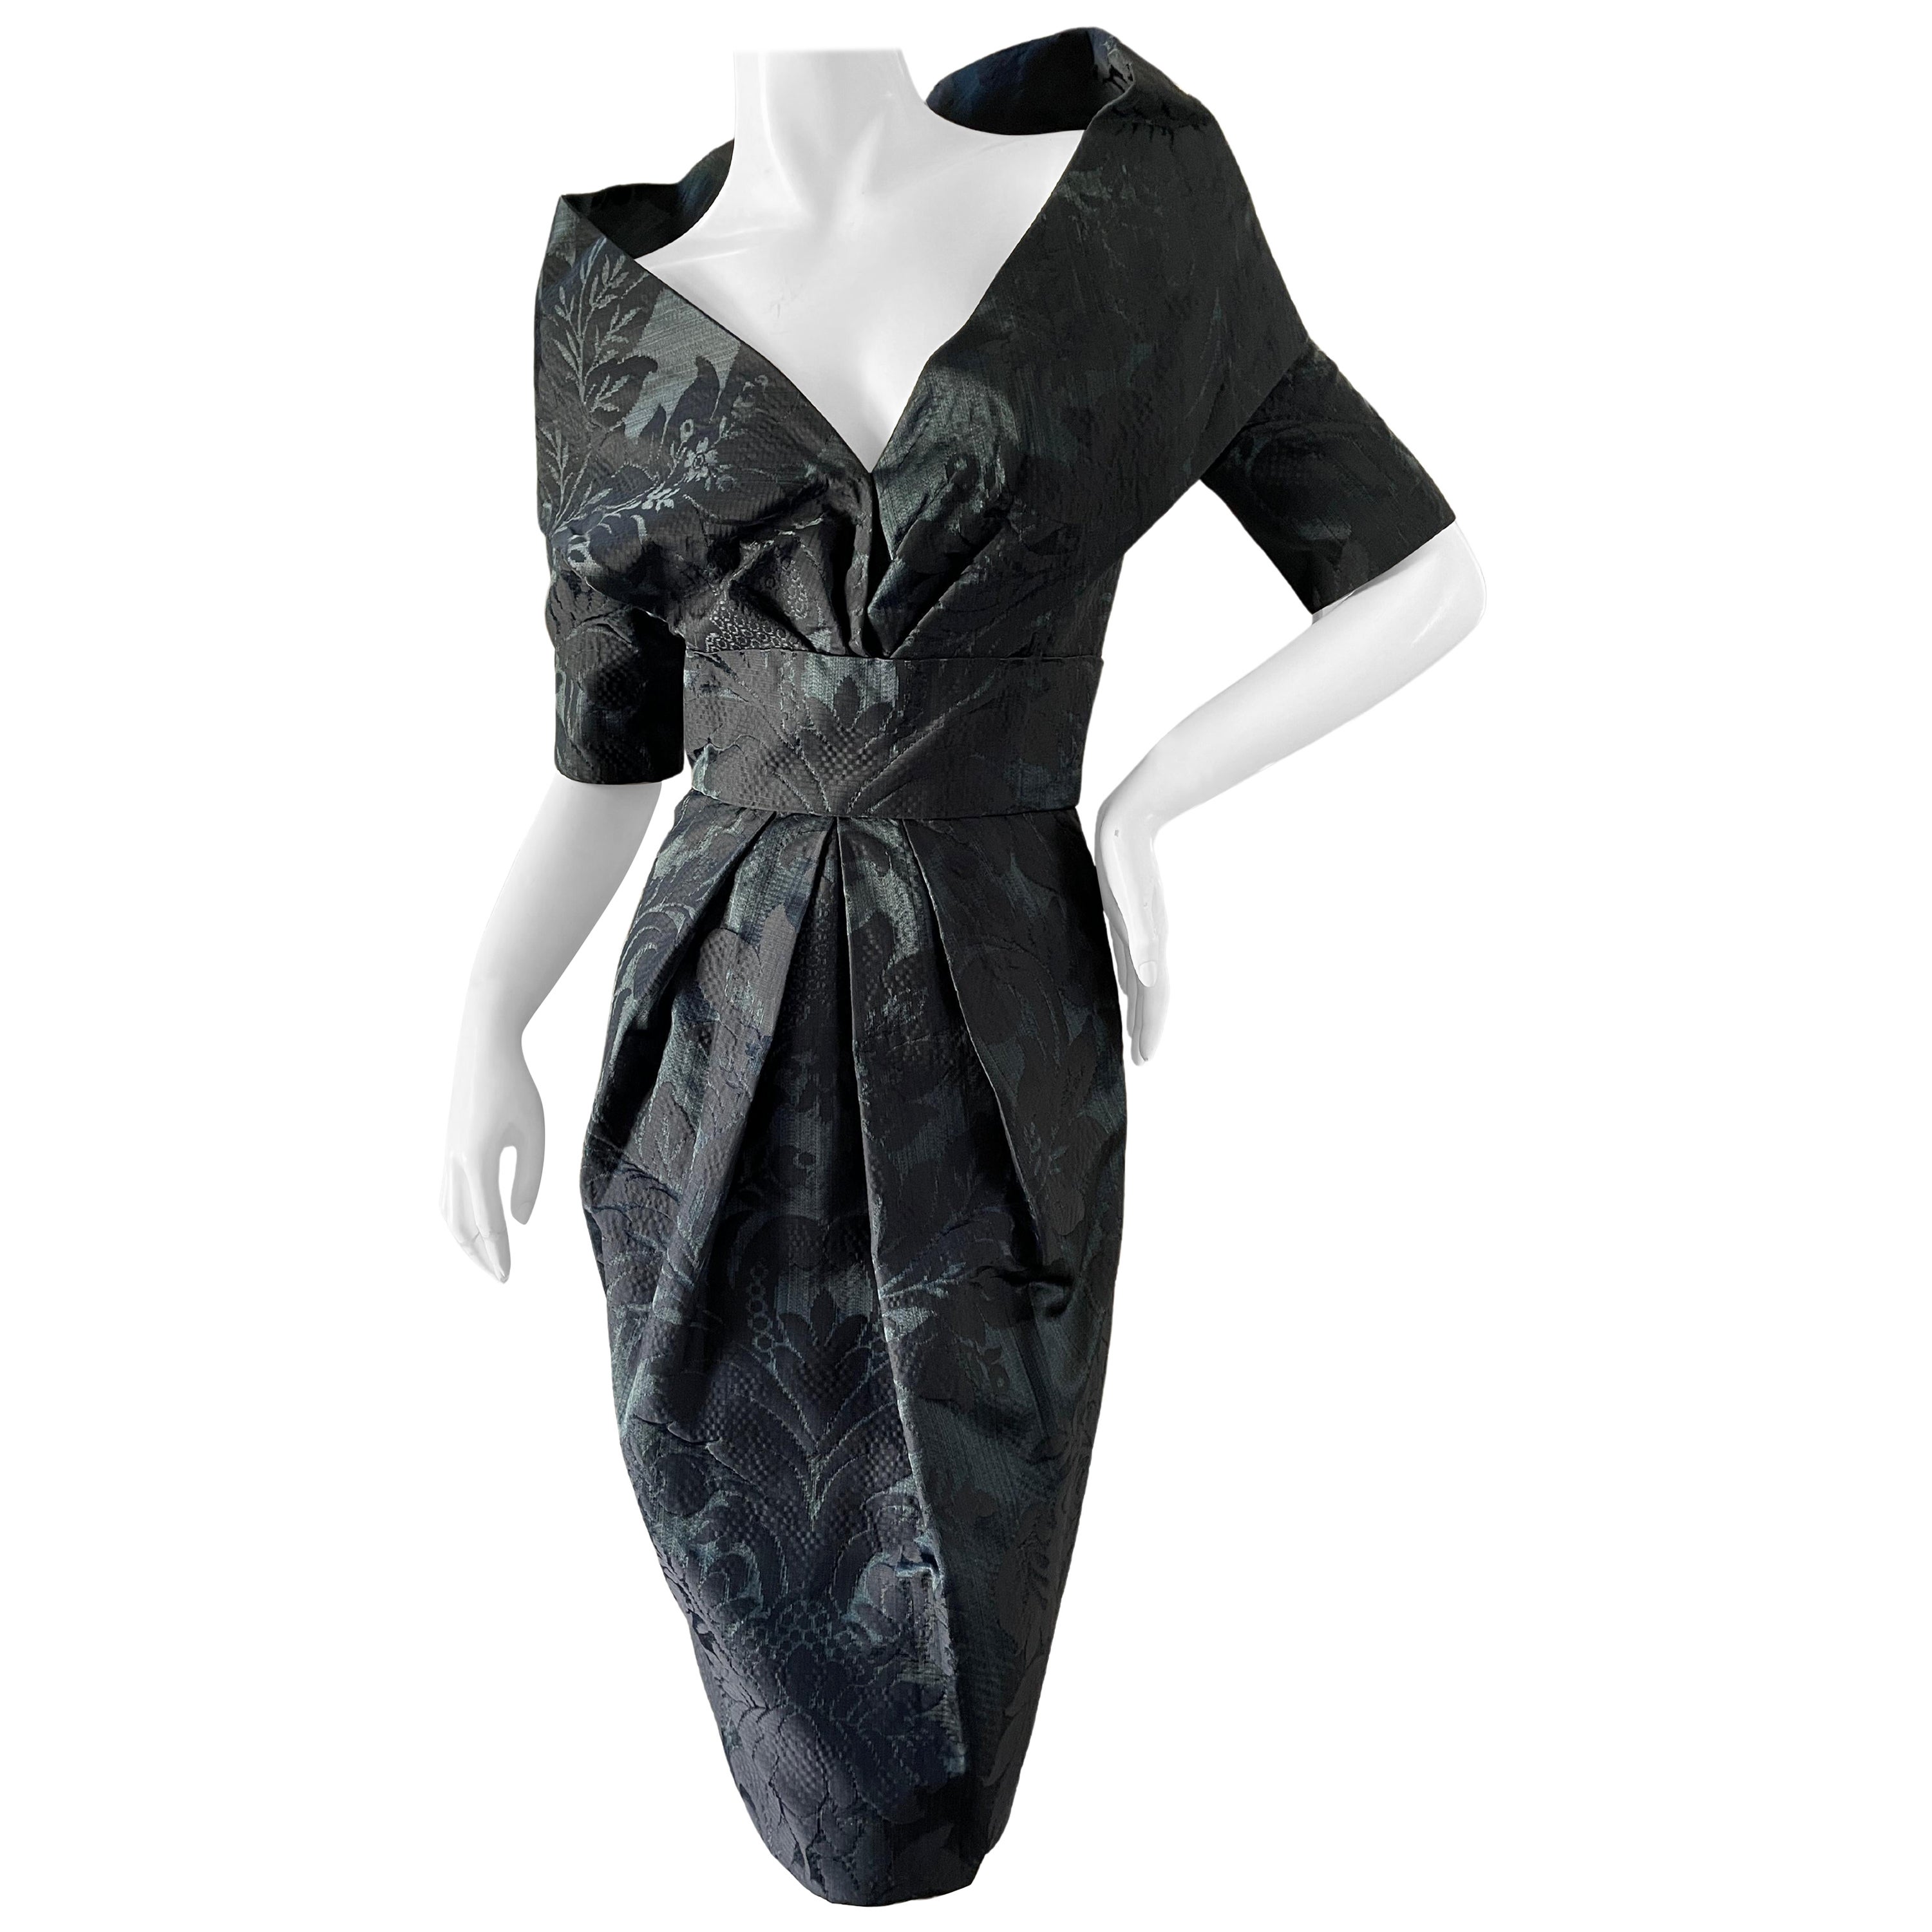 Oscar de la Renta Vintage Teal & Black Jacquard Cocktail Dress w Portrait Collar For Sale